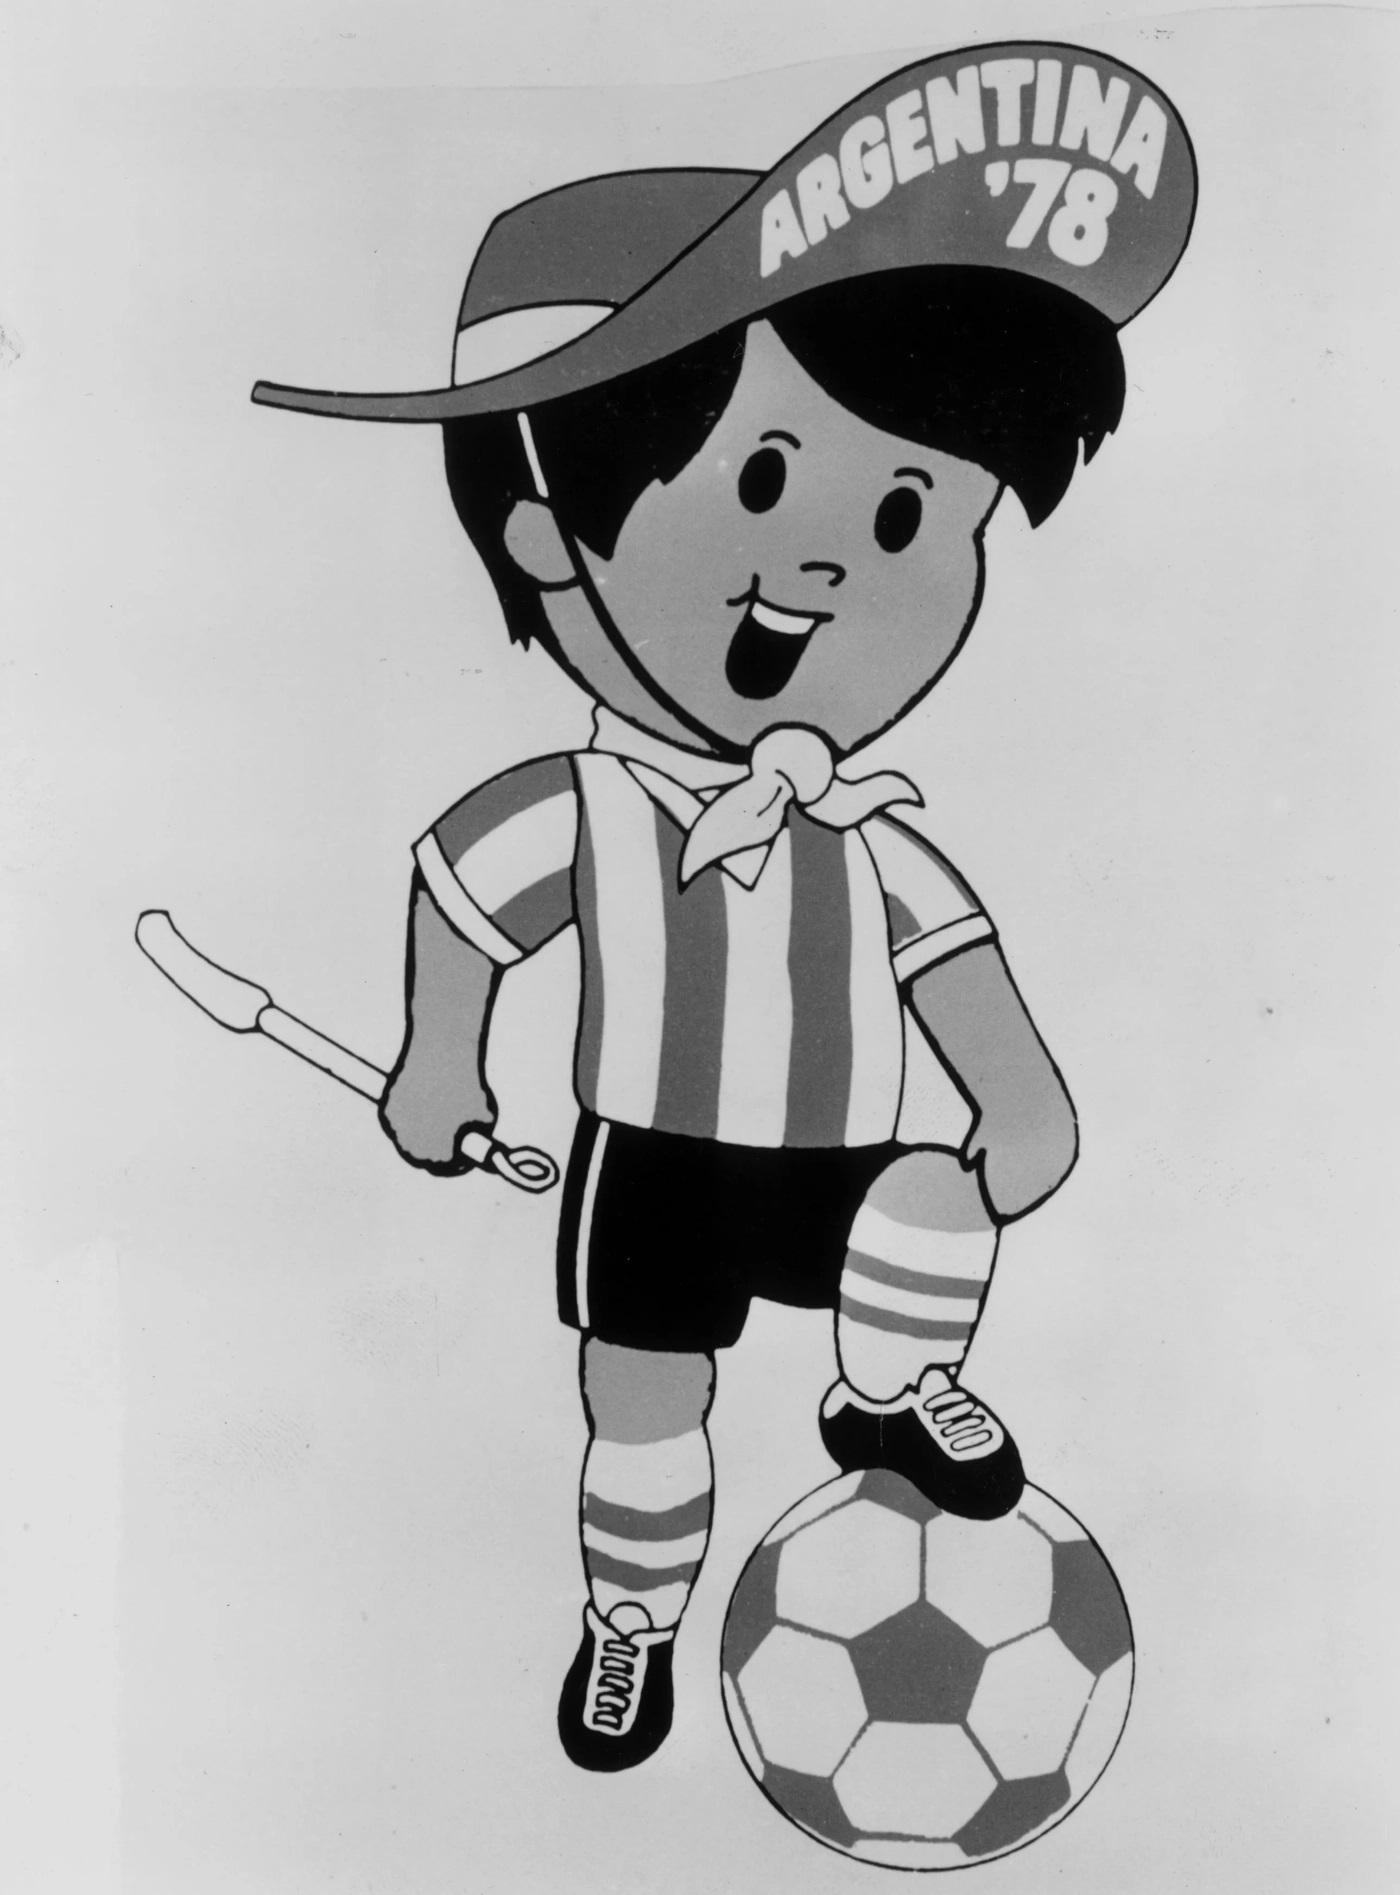 Gauchito - Mascota de Argentina 1978